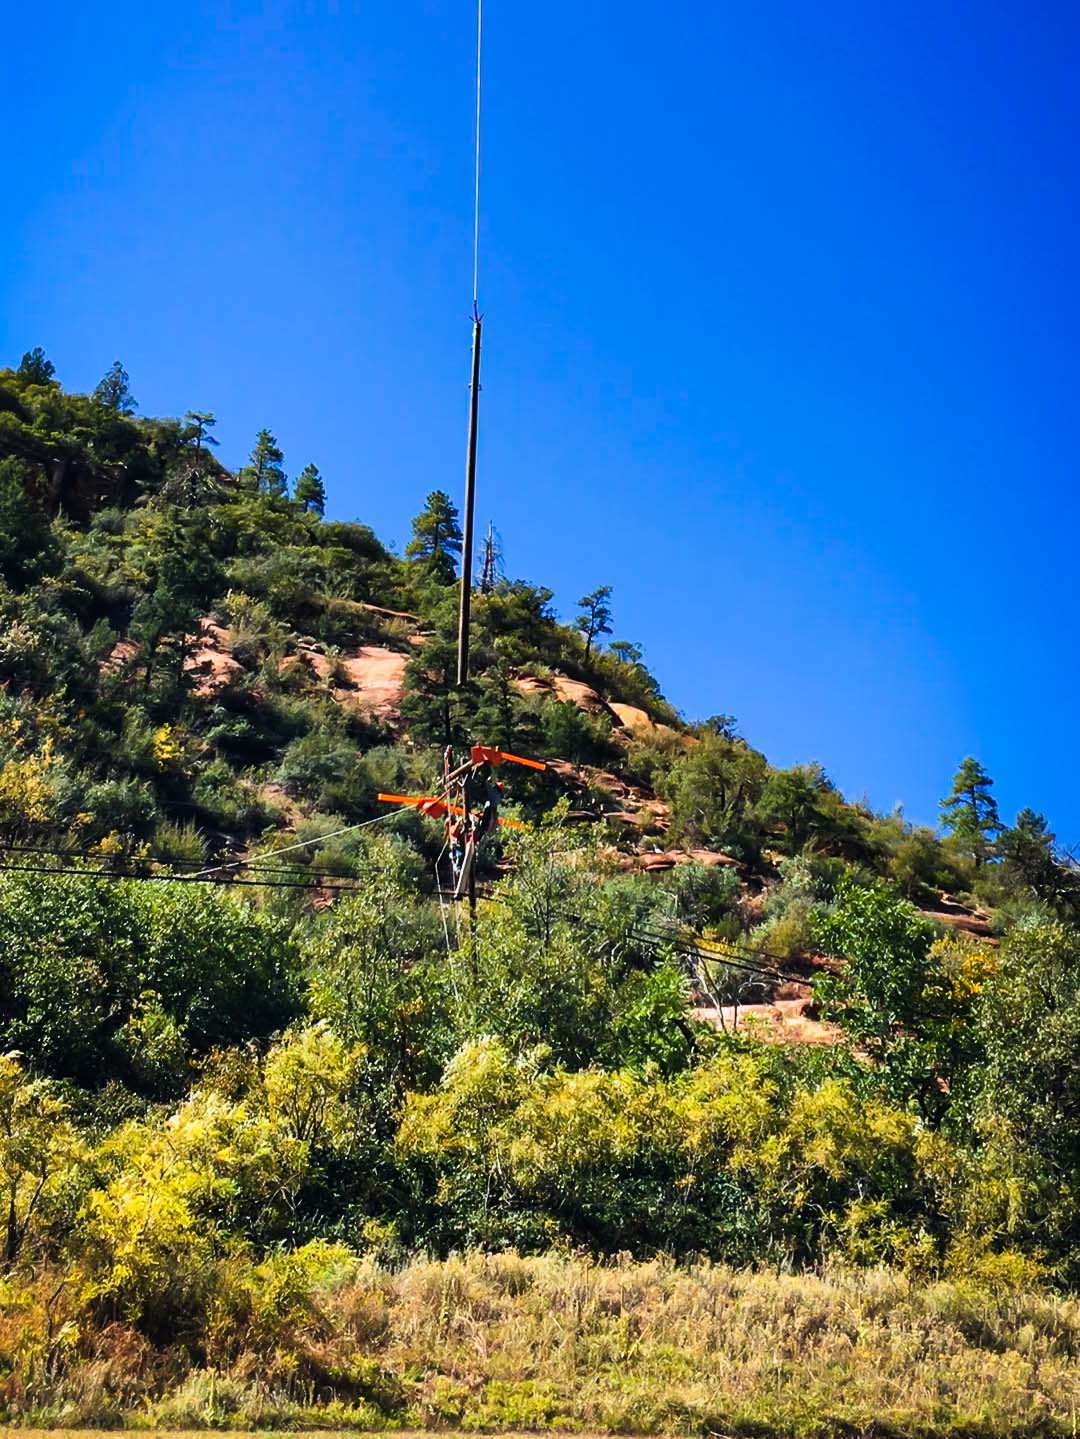 Crane lifting a power line pole